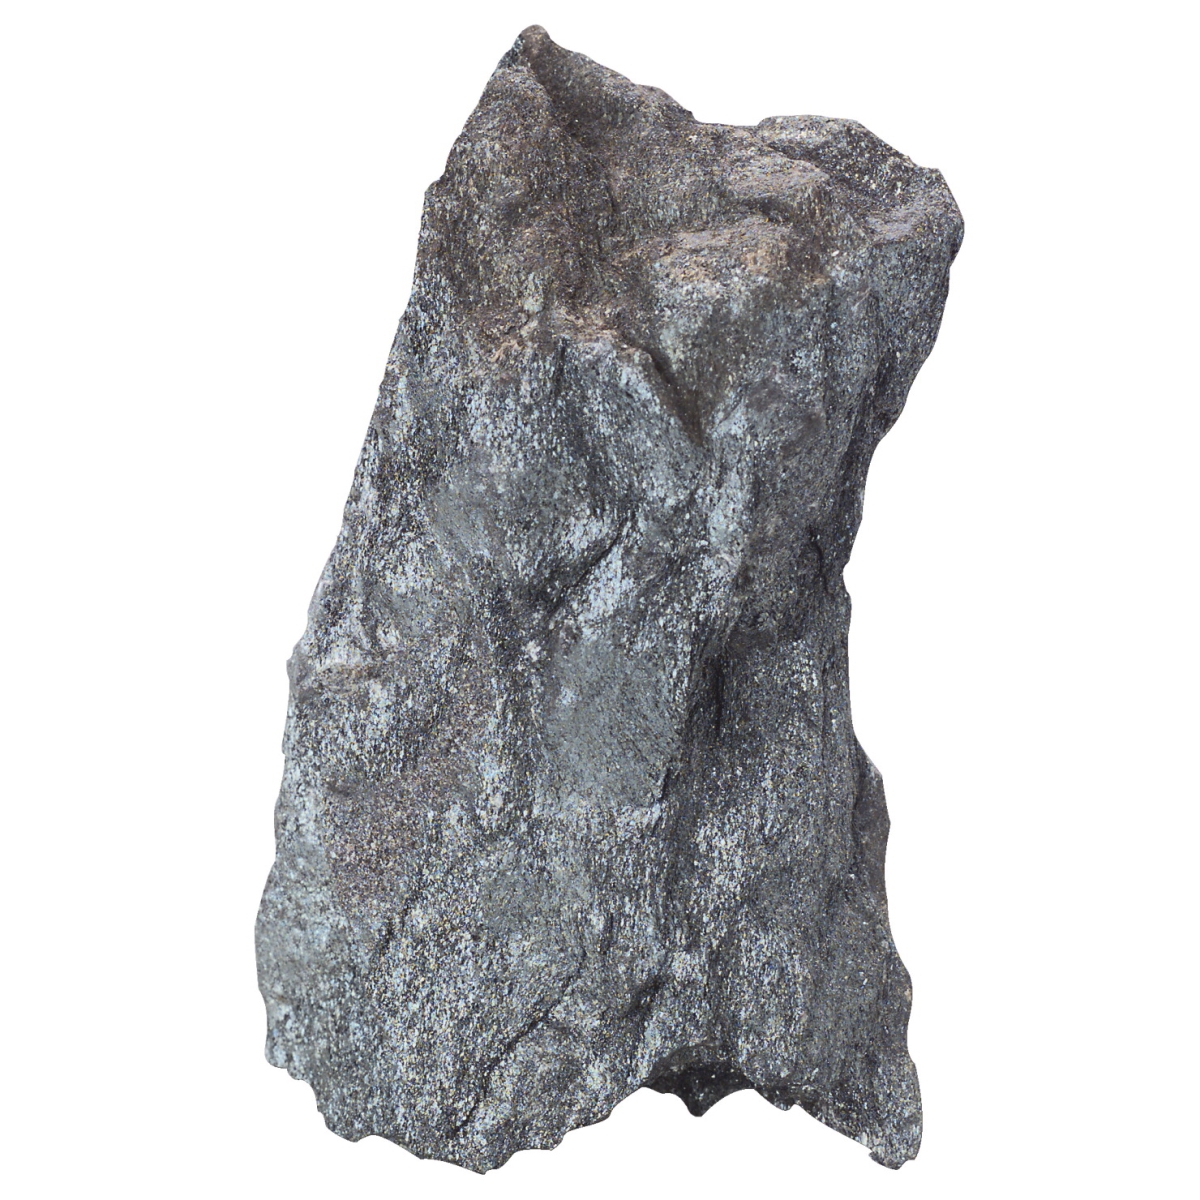 587038 Student Scott Resources - Fine-grained Hematite, Black - Pack Of 10